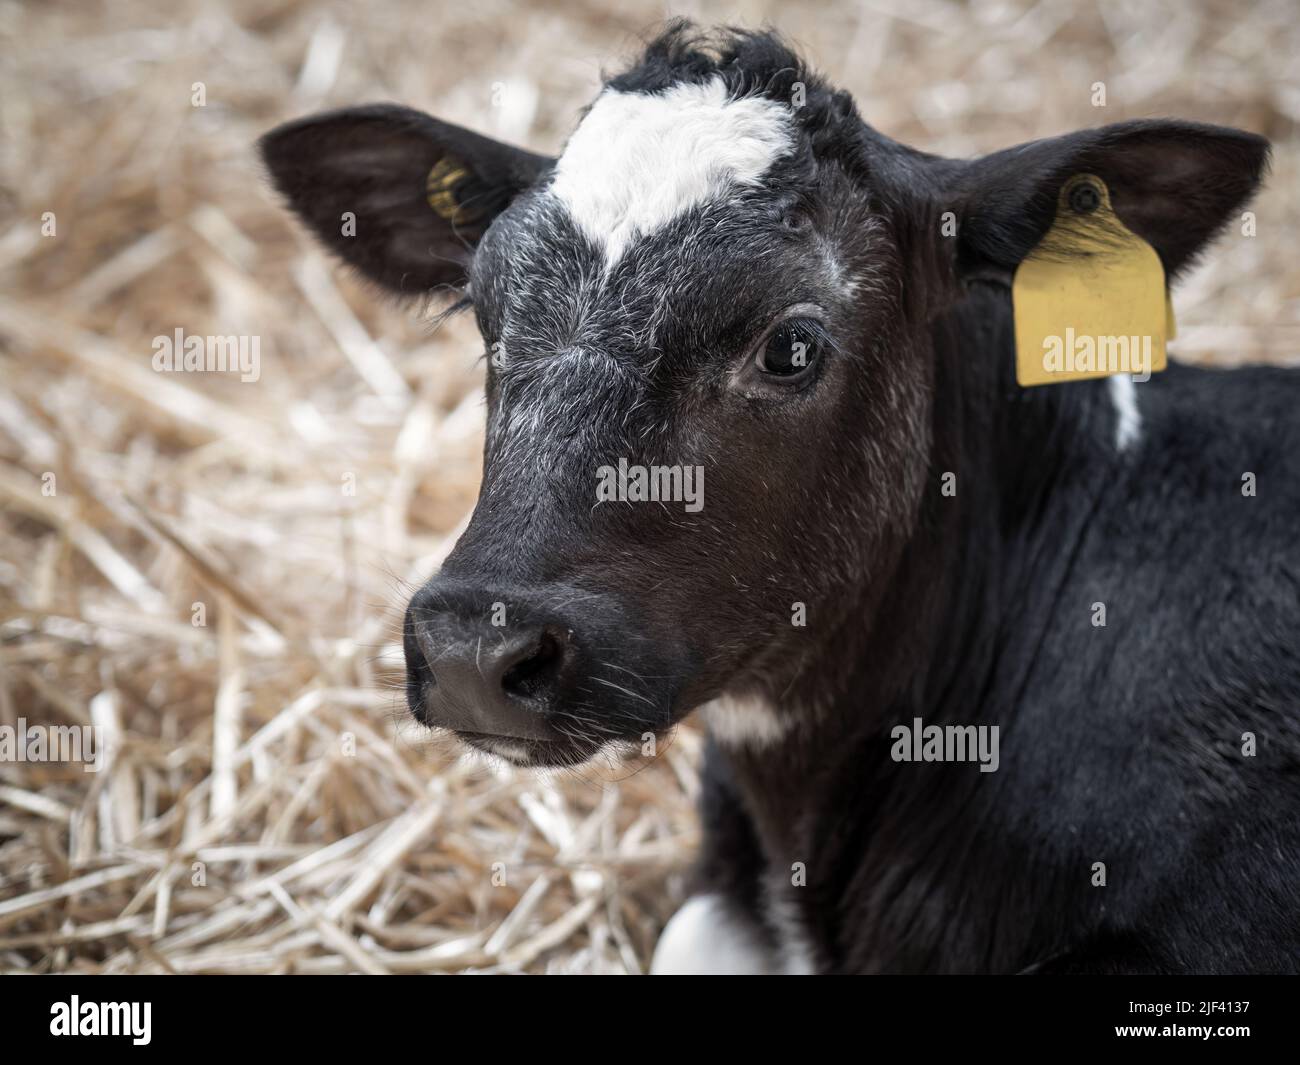 Young black and white Friesian calf in barn closeup. Stock Photo